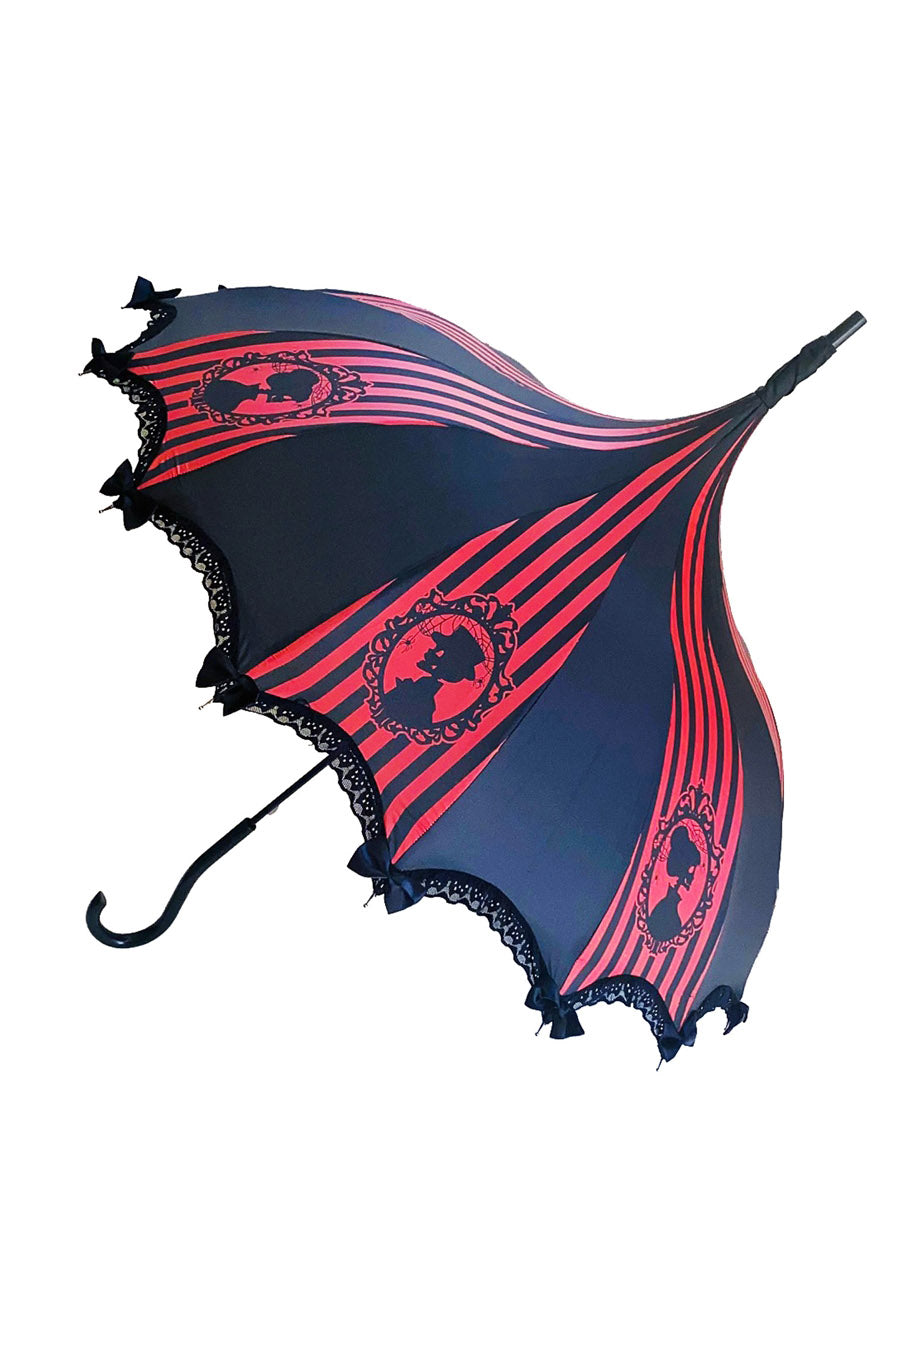 Striped Skeleton Umbrella [Red/Black]